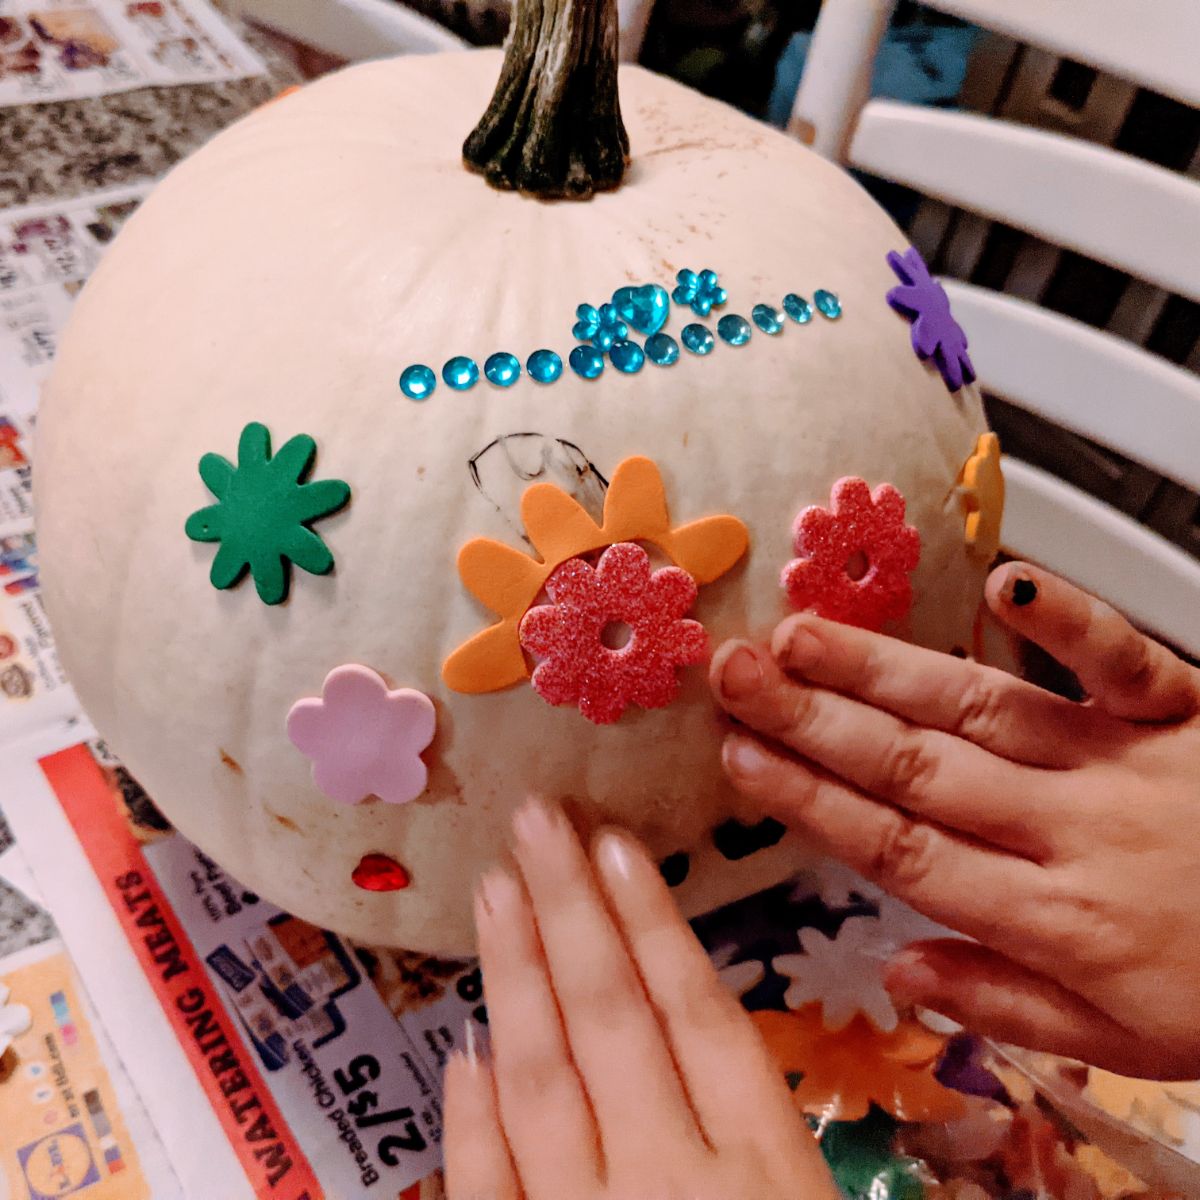 Little hands decorating a white pumpkin with foam flower stickers